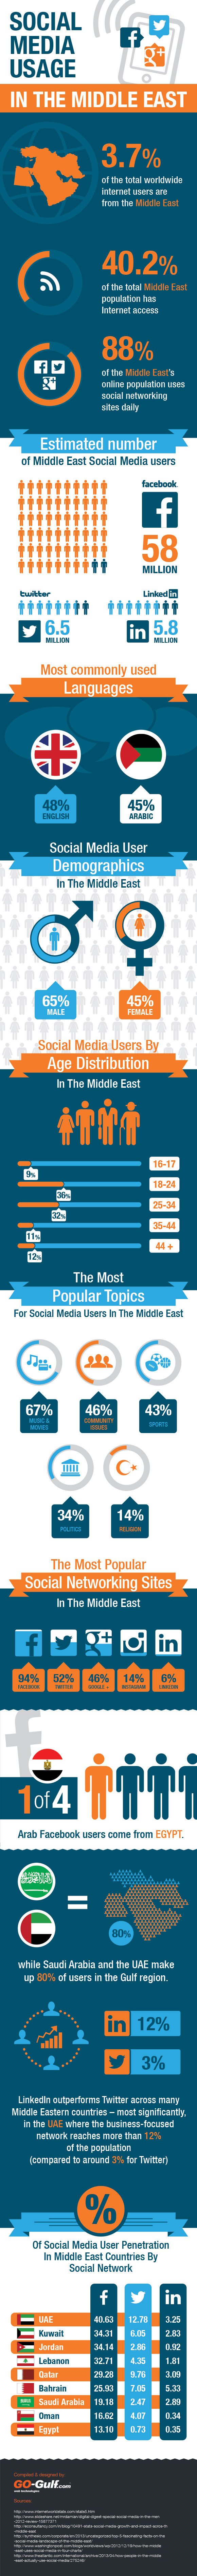 social-media-middle-east